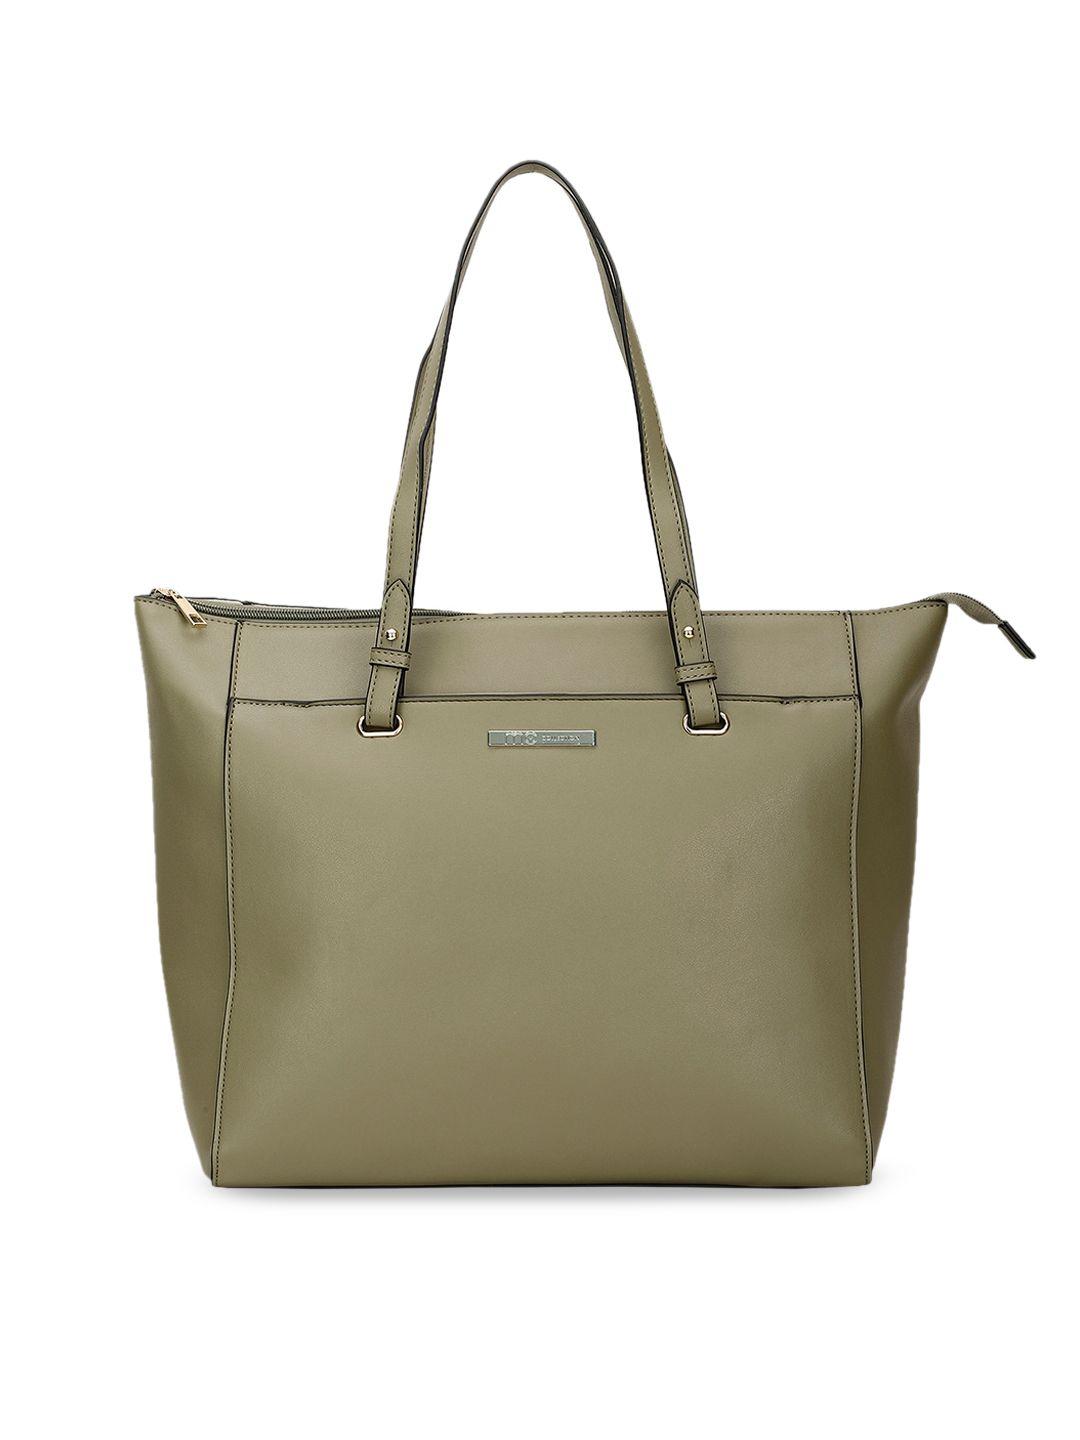 marie claire olive green structured shoulder bag